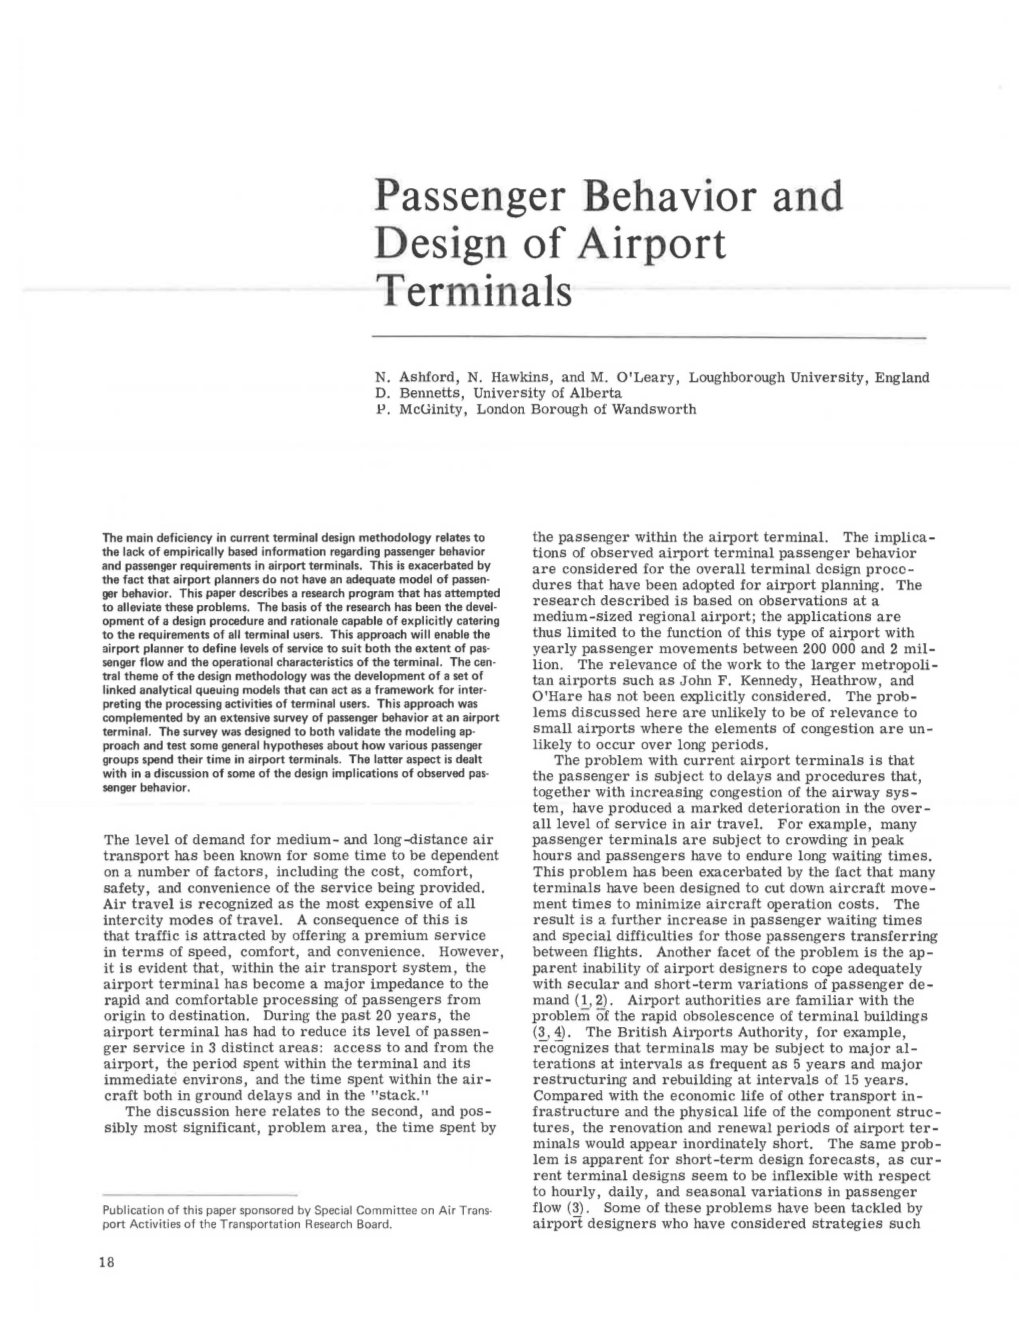 Passenger Behavior and Design of Airport Terminals